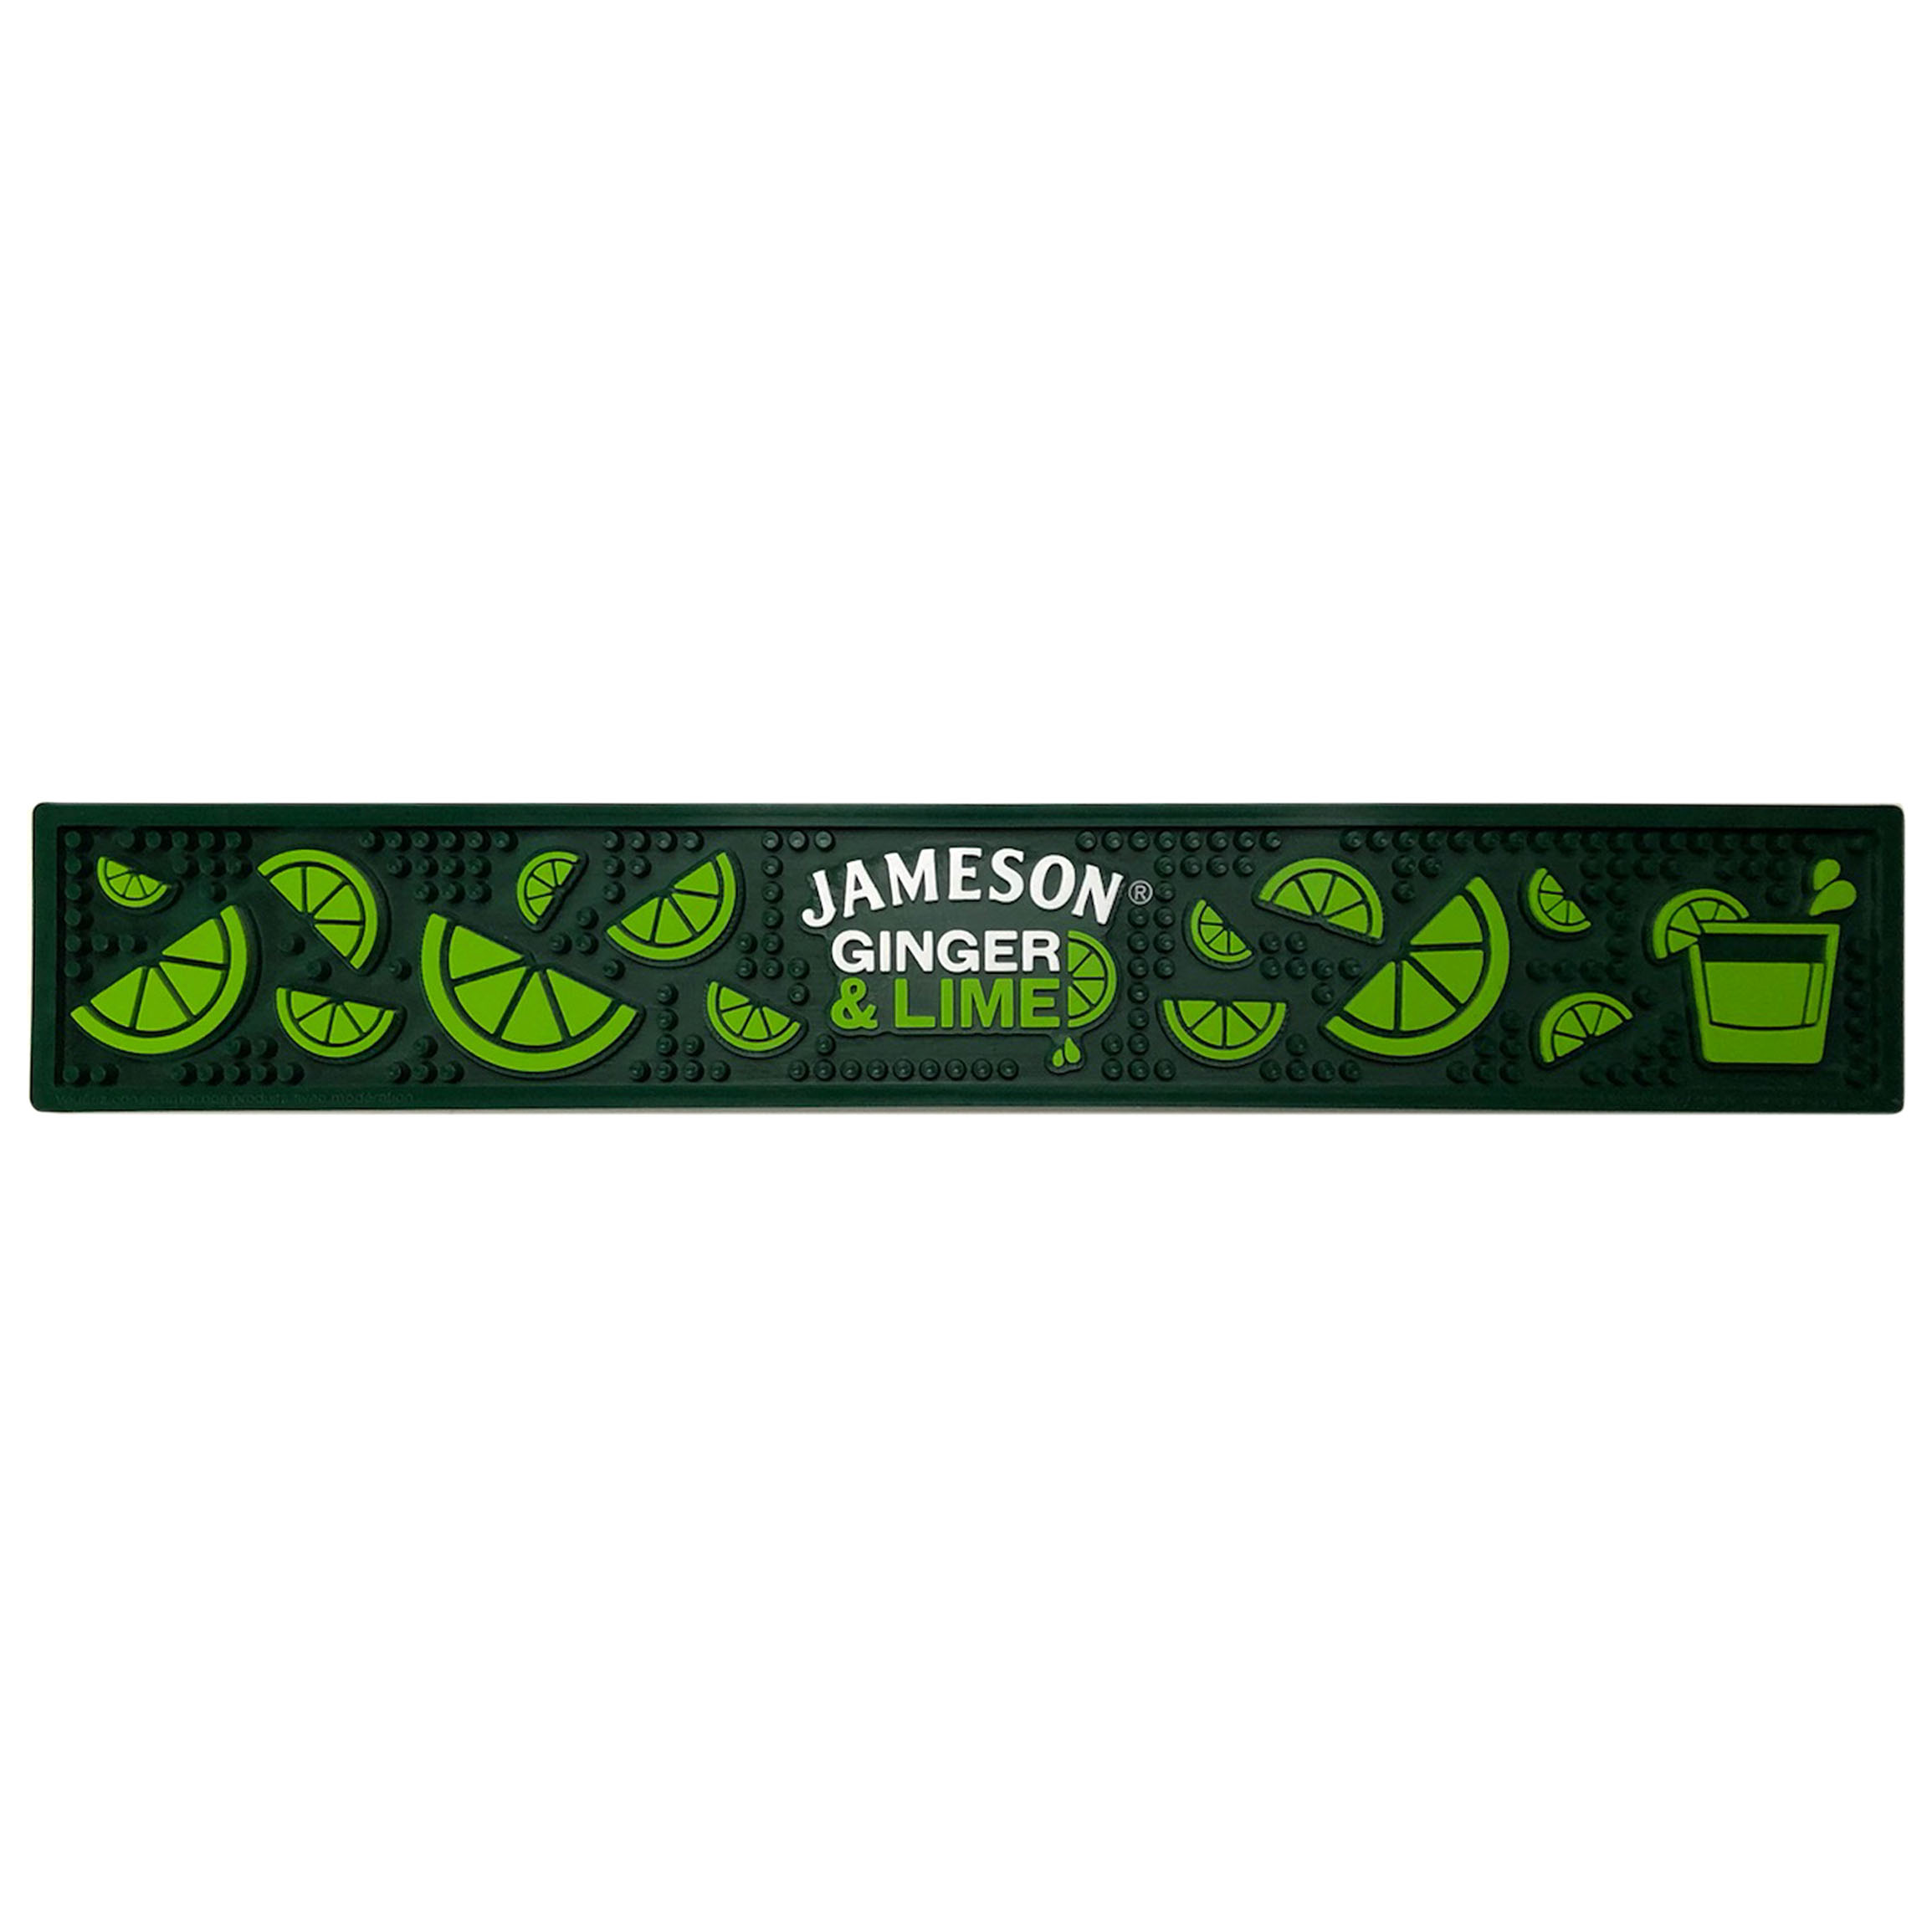 Jameson Ginger and Lime Rail Mat